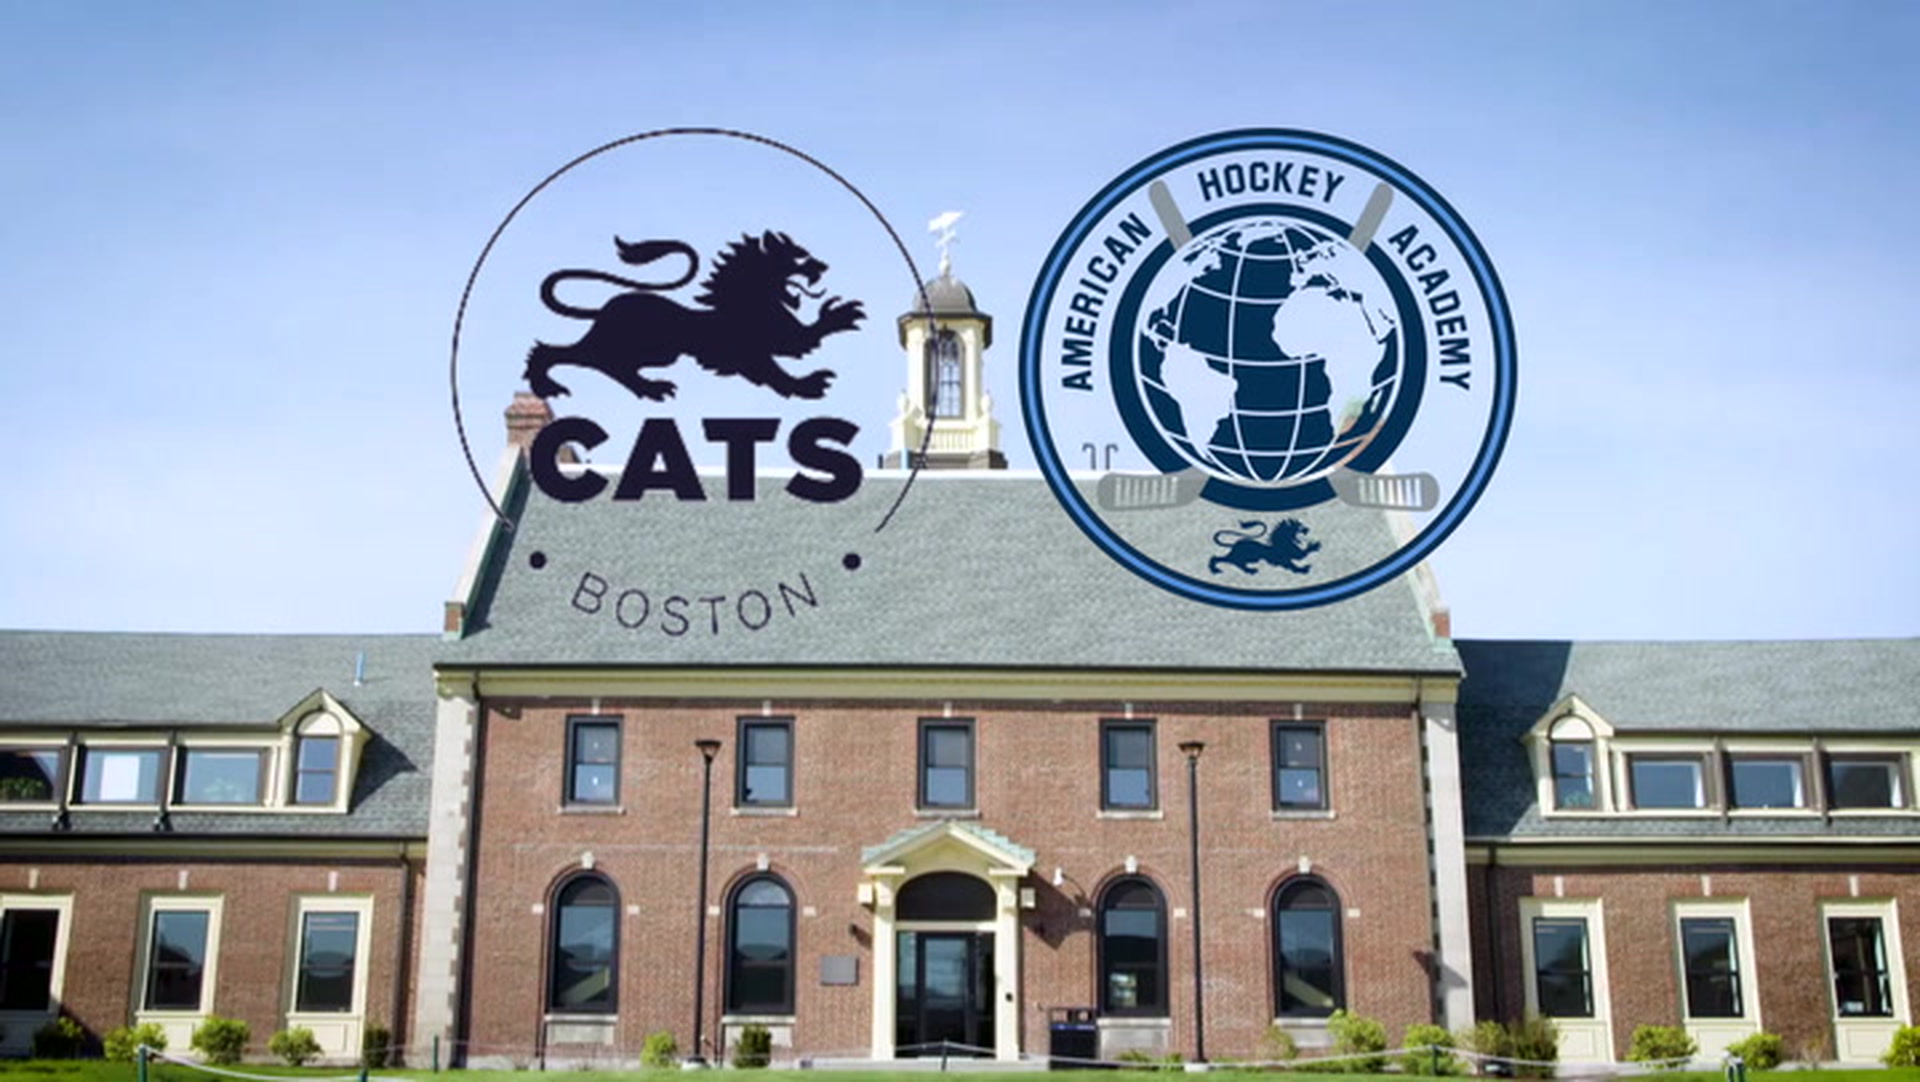 CATS Academy Boston - ICEDU Indonesia